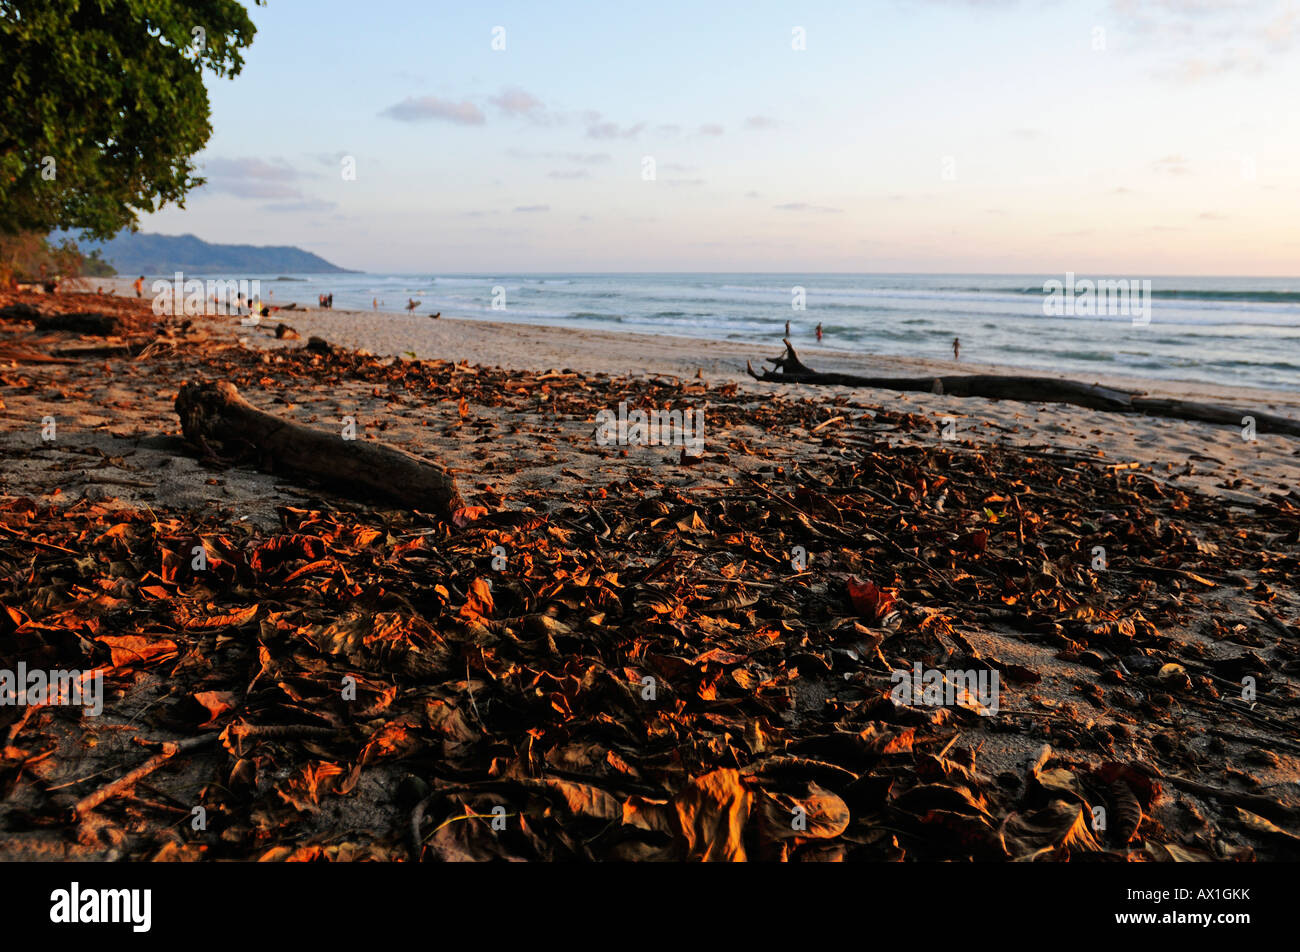 Beach of Santa Teresa, Mal Pais, Nicoya Peninsula, Costa Rica, Central America Stock Photo